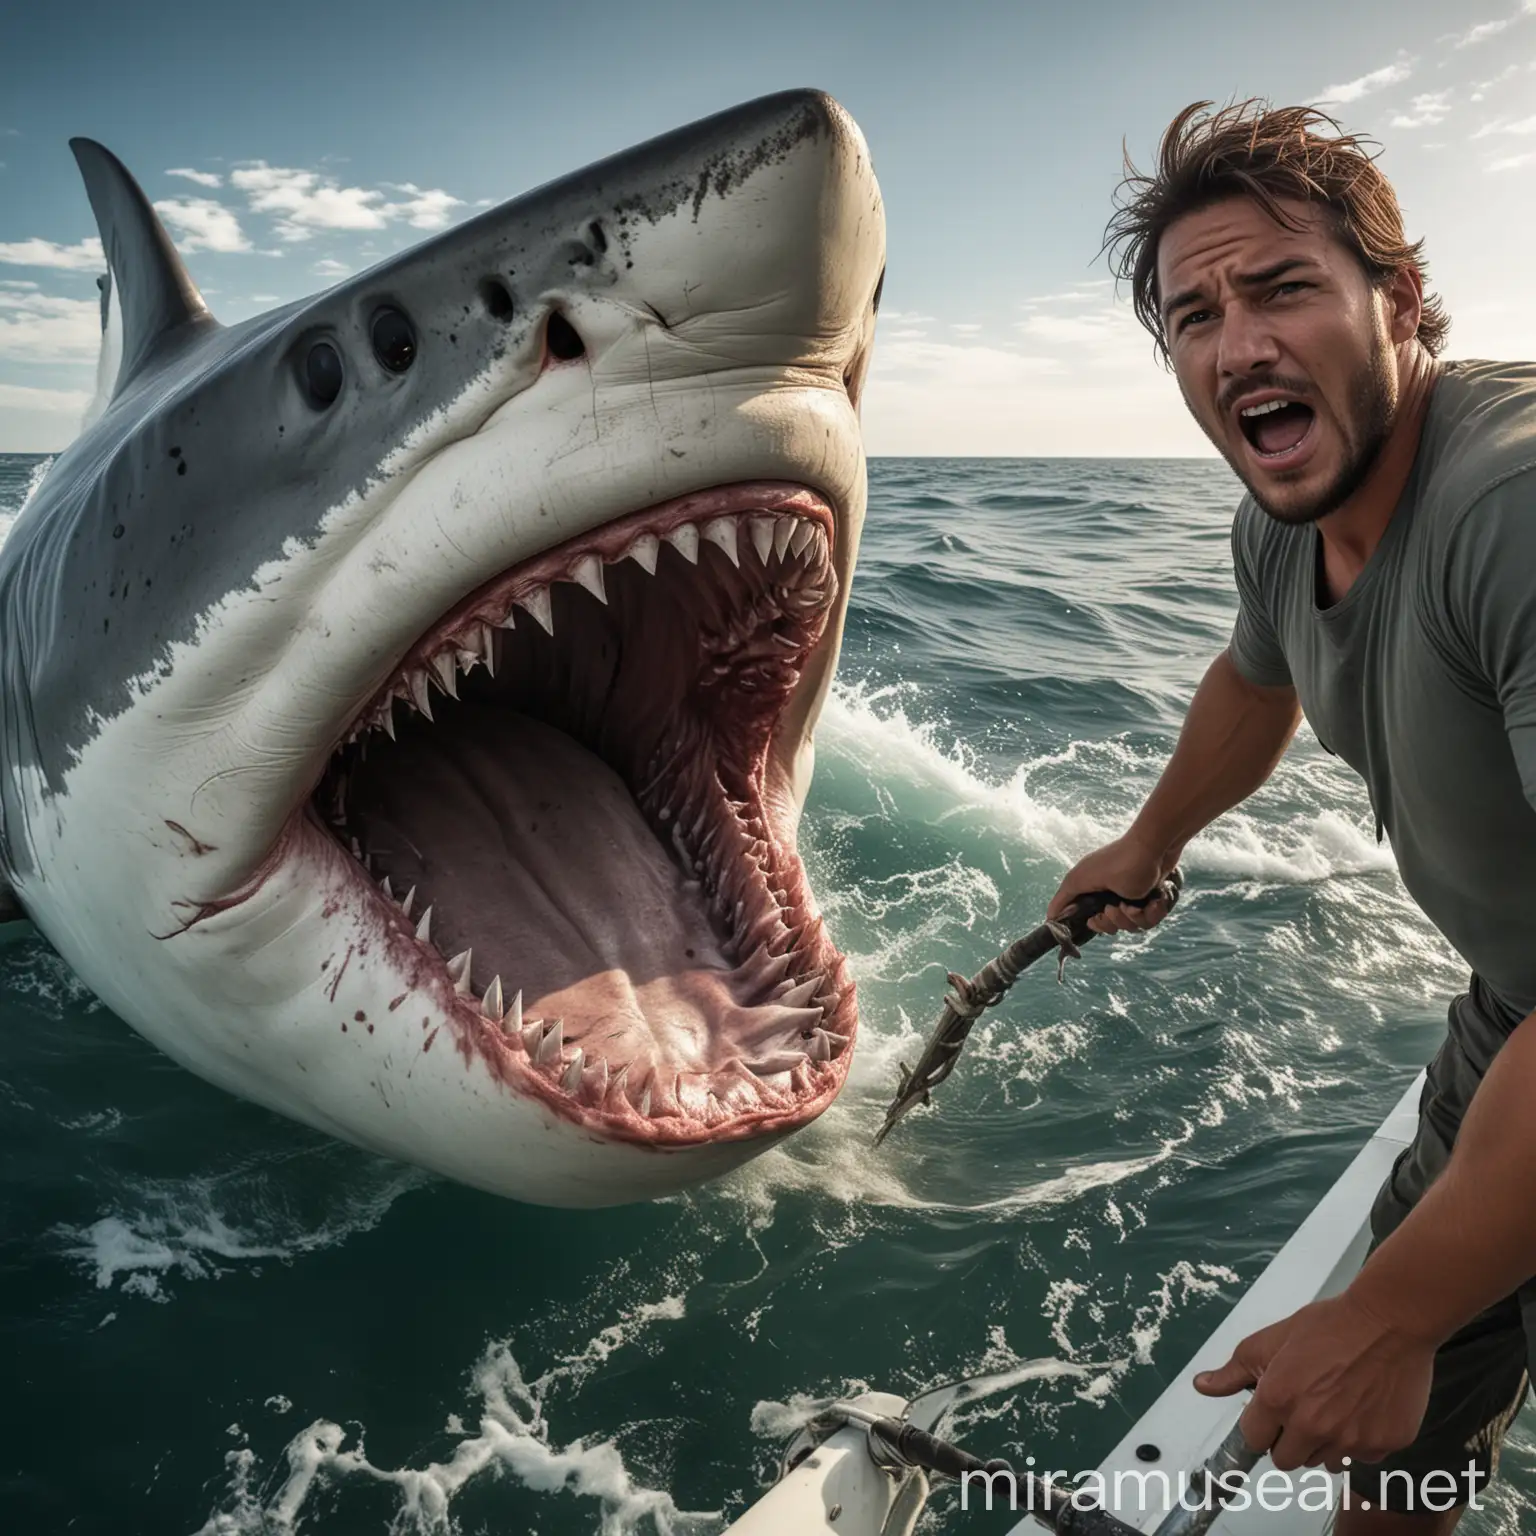 Handsome Fisherman Battles Shark Intense Action Scene in Ultra HDR Style